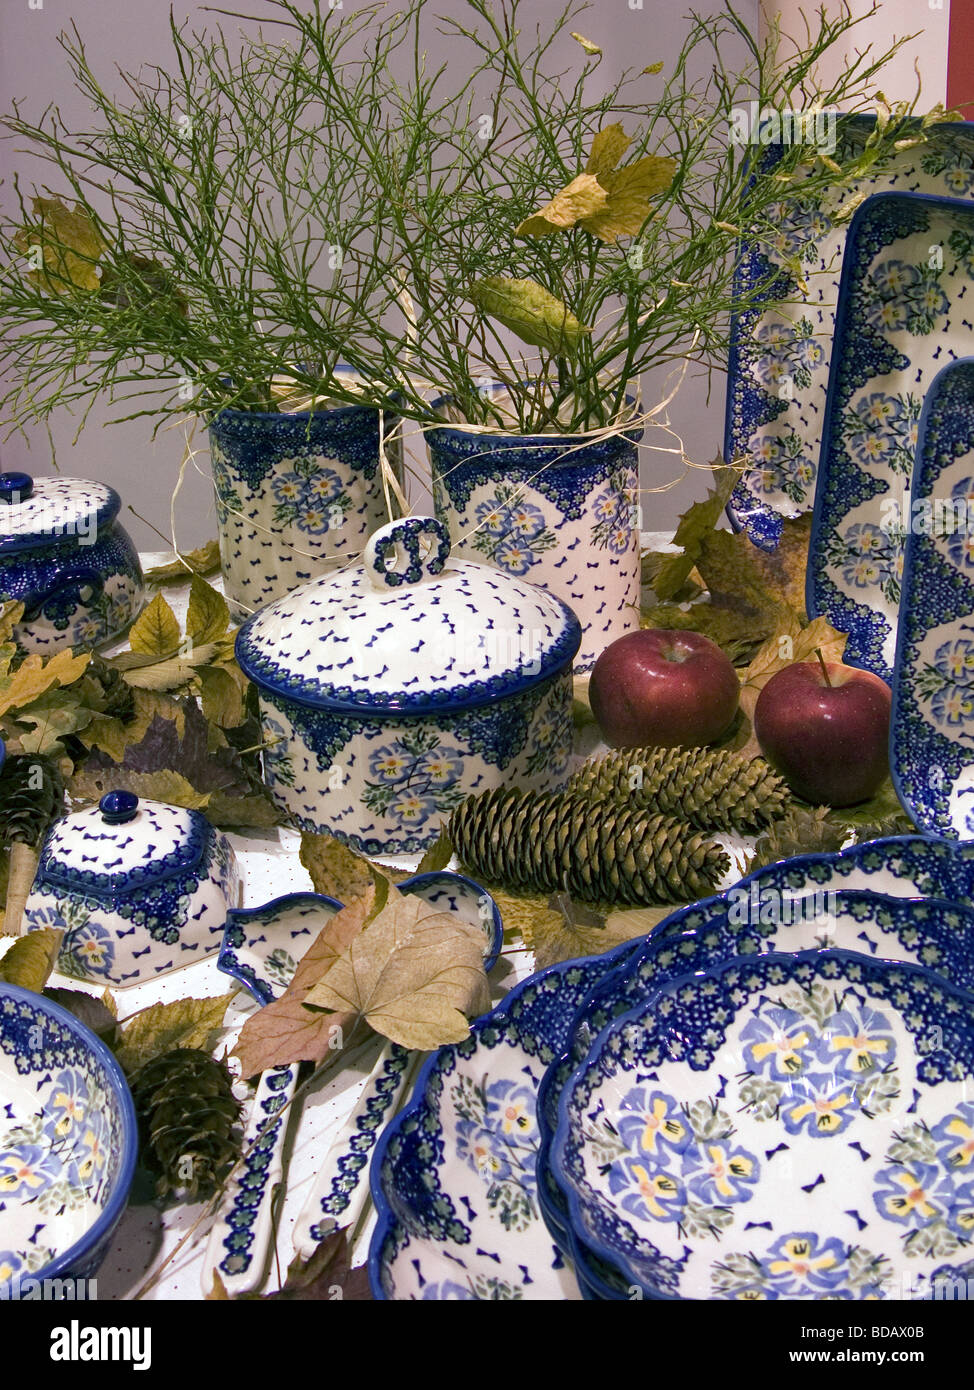 Pottery from Bolesławiec,Pottery, Boleslawiec, dishes, tableware, plates, pottery from Bolesławiec, Poland, manufacture, jug, di Stock Photo